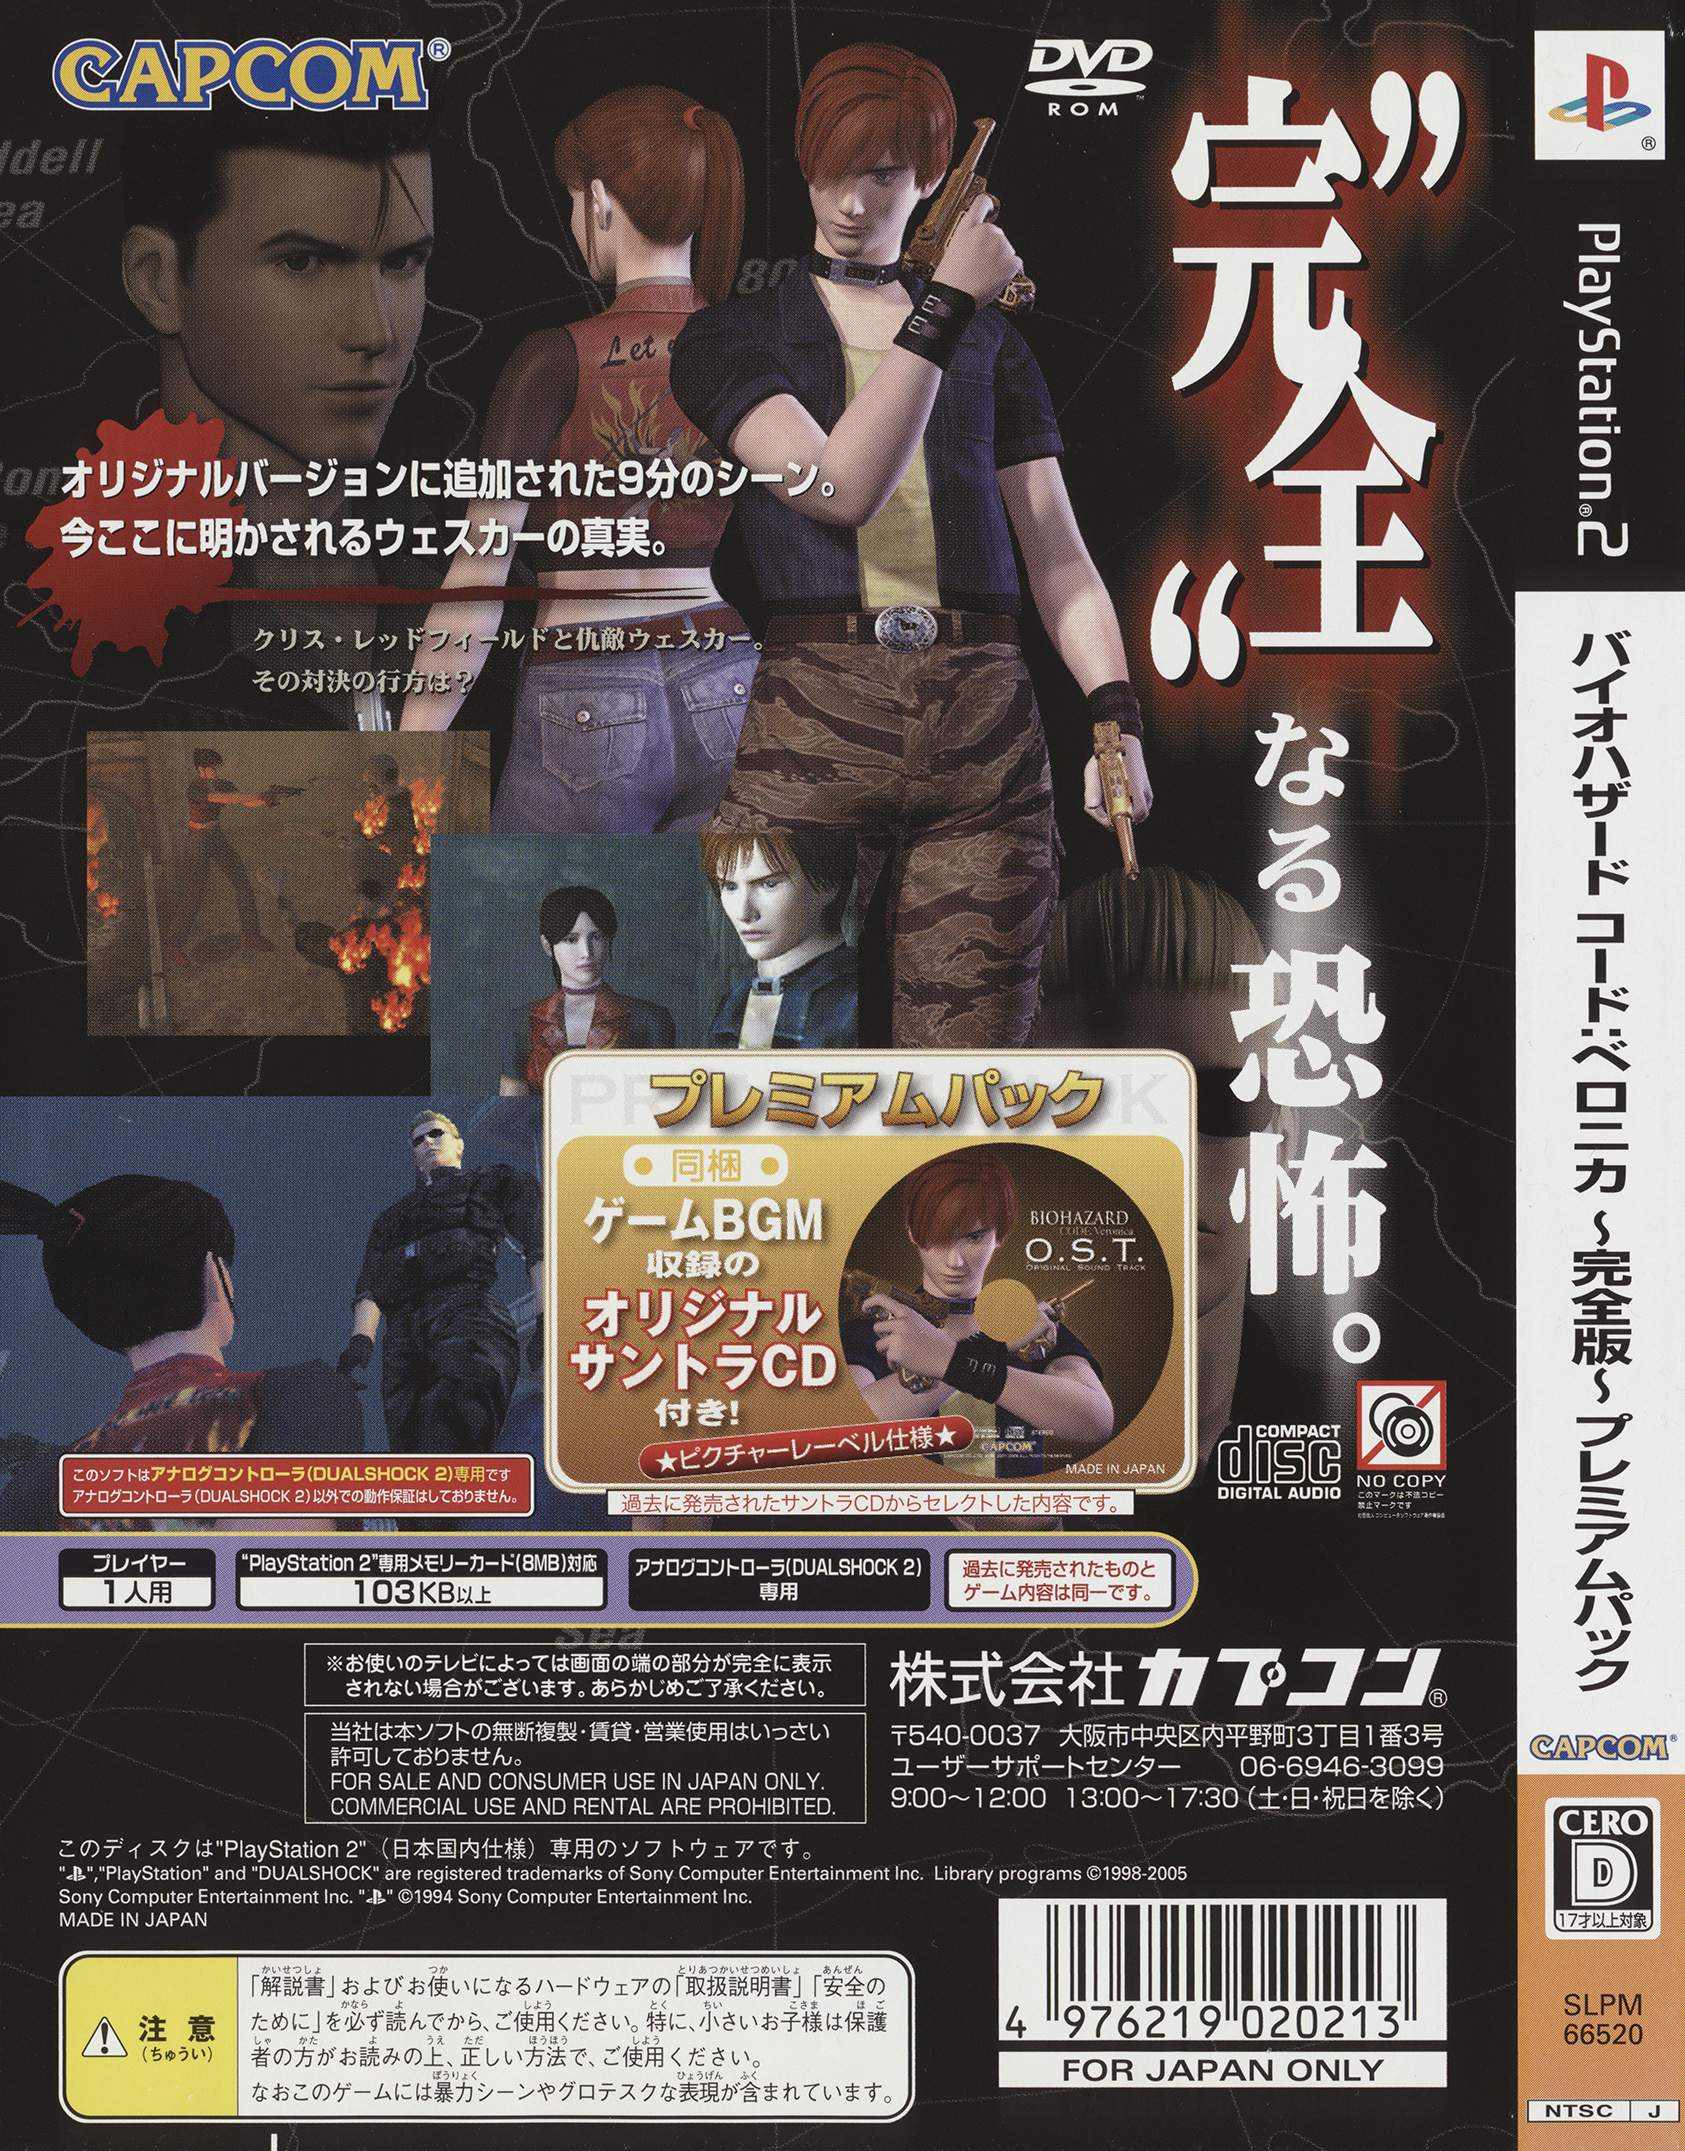 Resident Evil Code: Veronica - VGDB - Vídeo Game Data Base